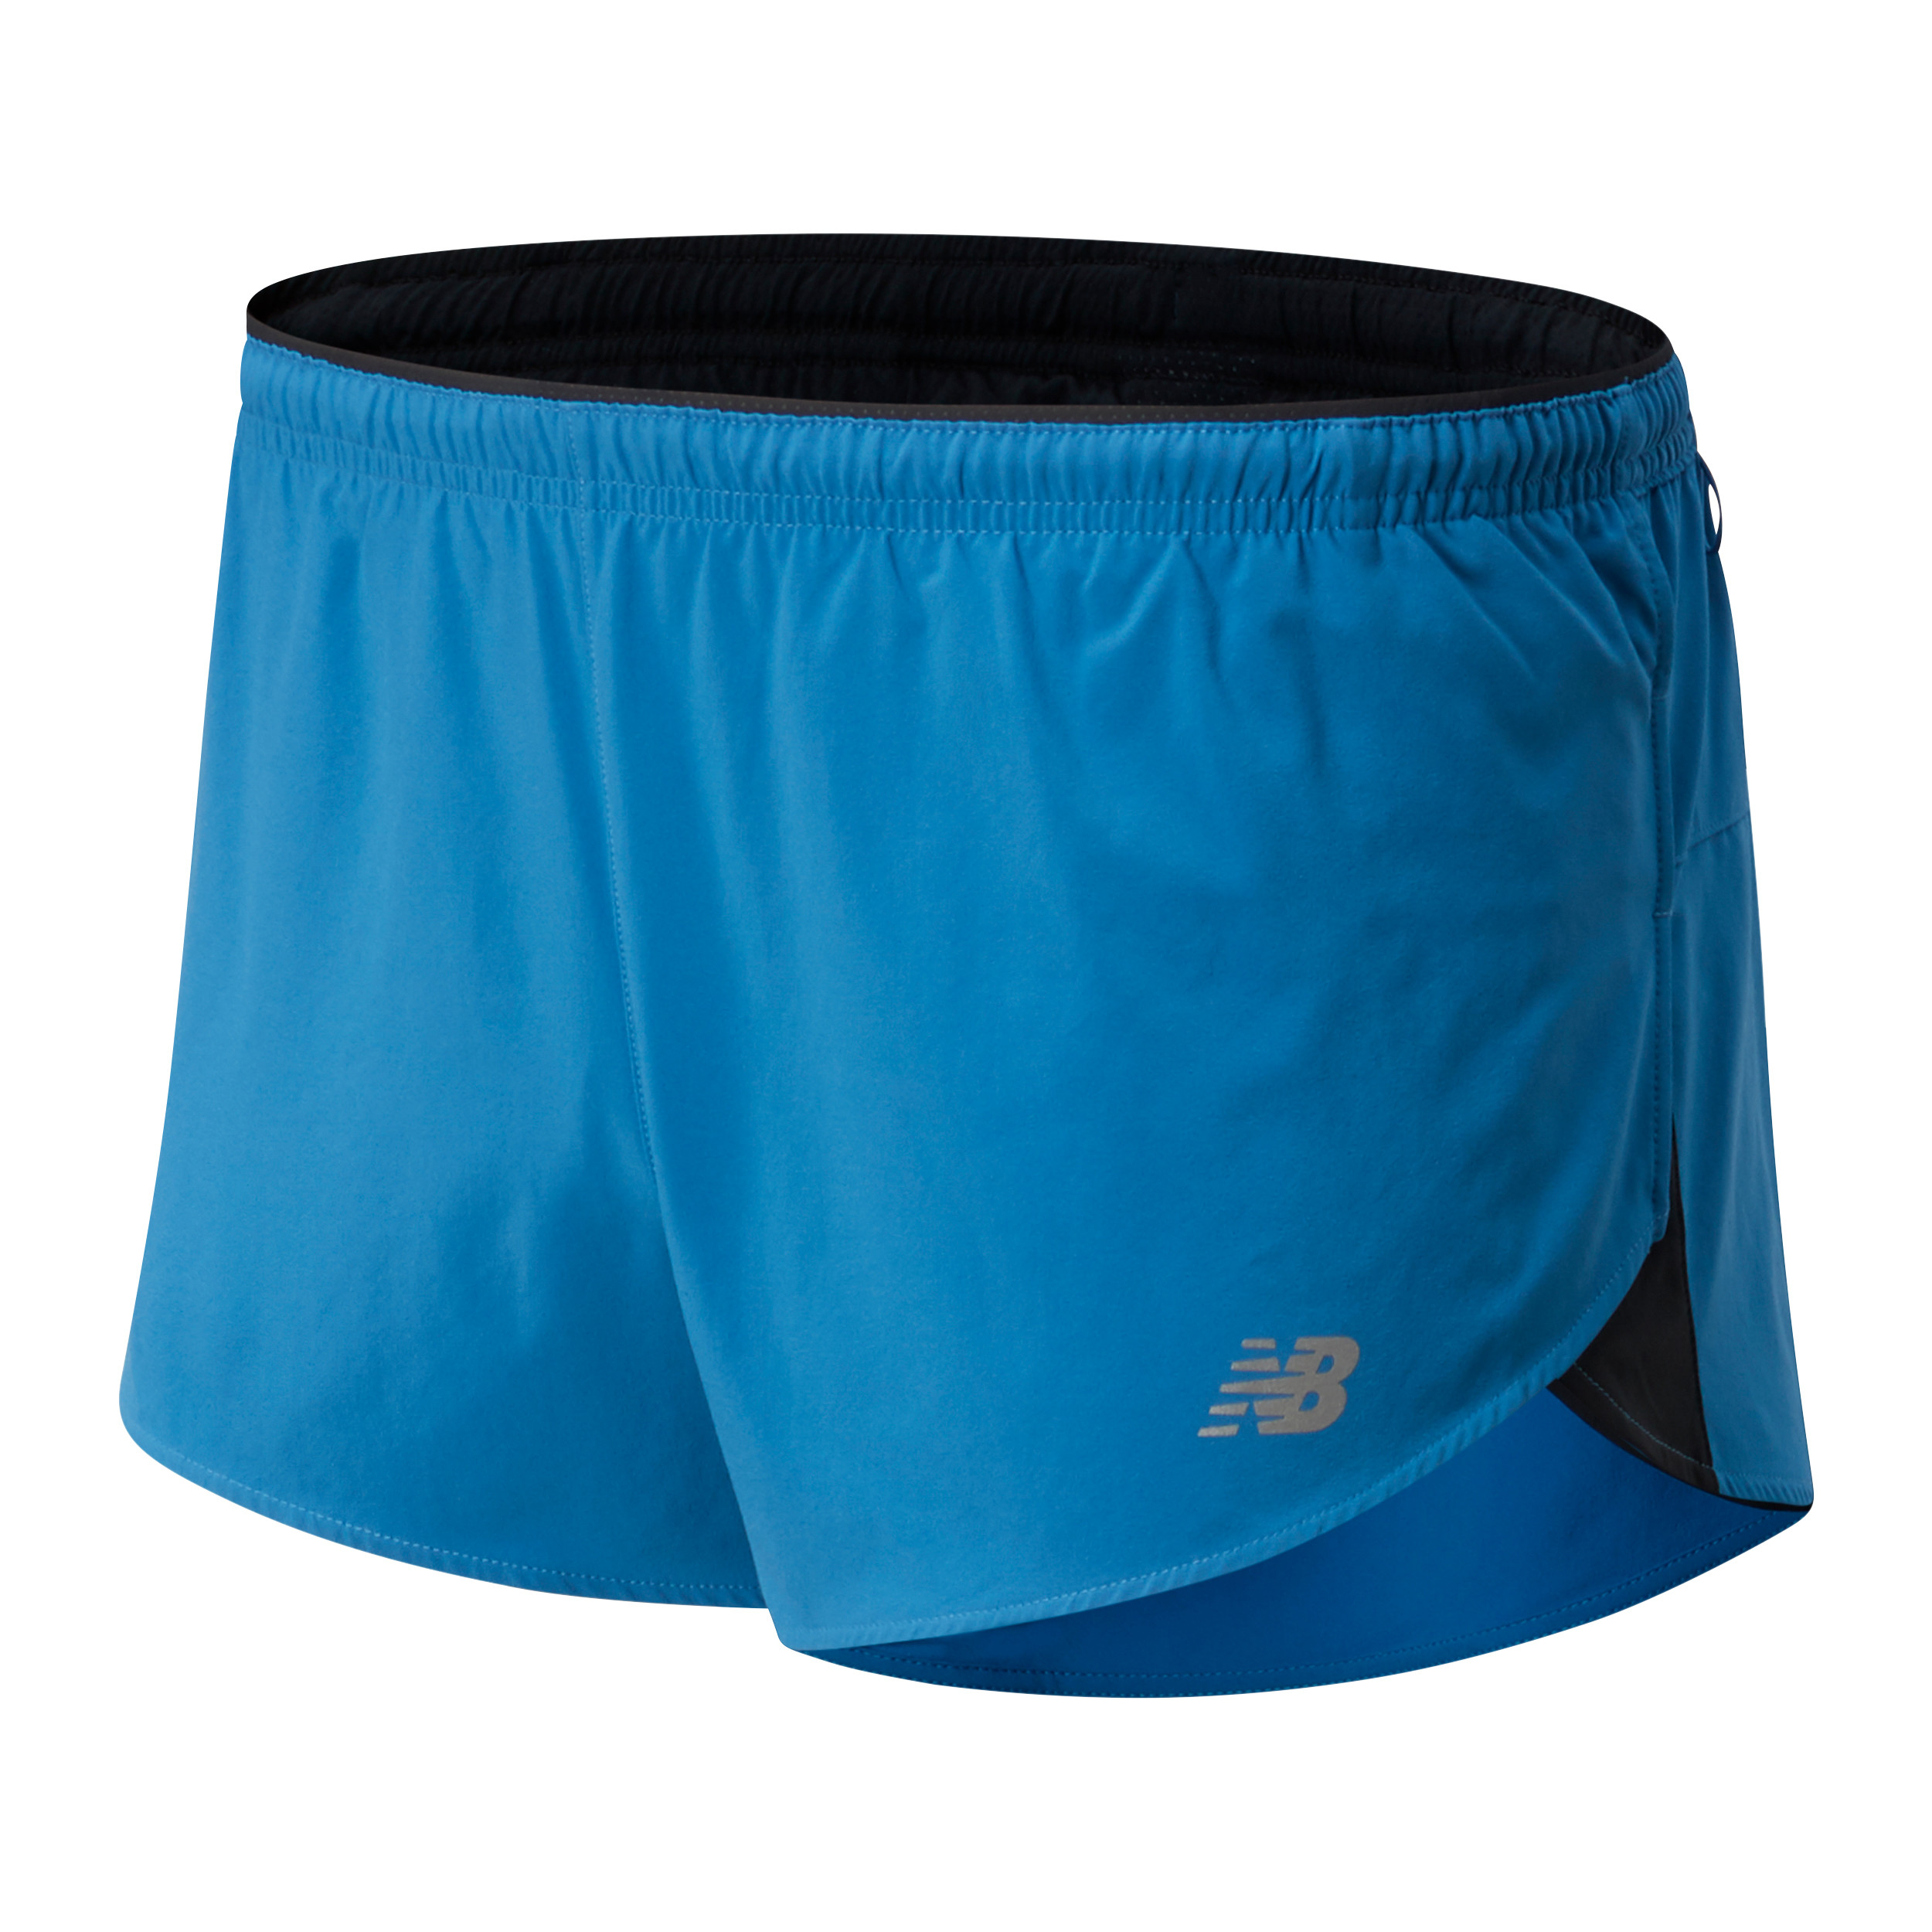 Imbracaminte barbati new balance impact run 3-inch split shorts mako blue